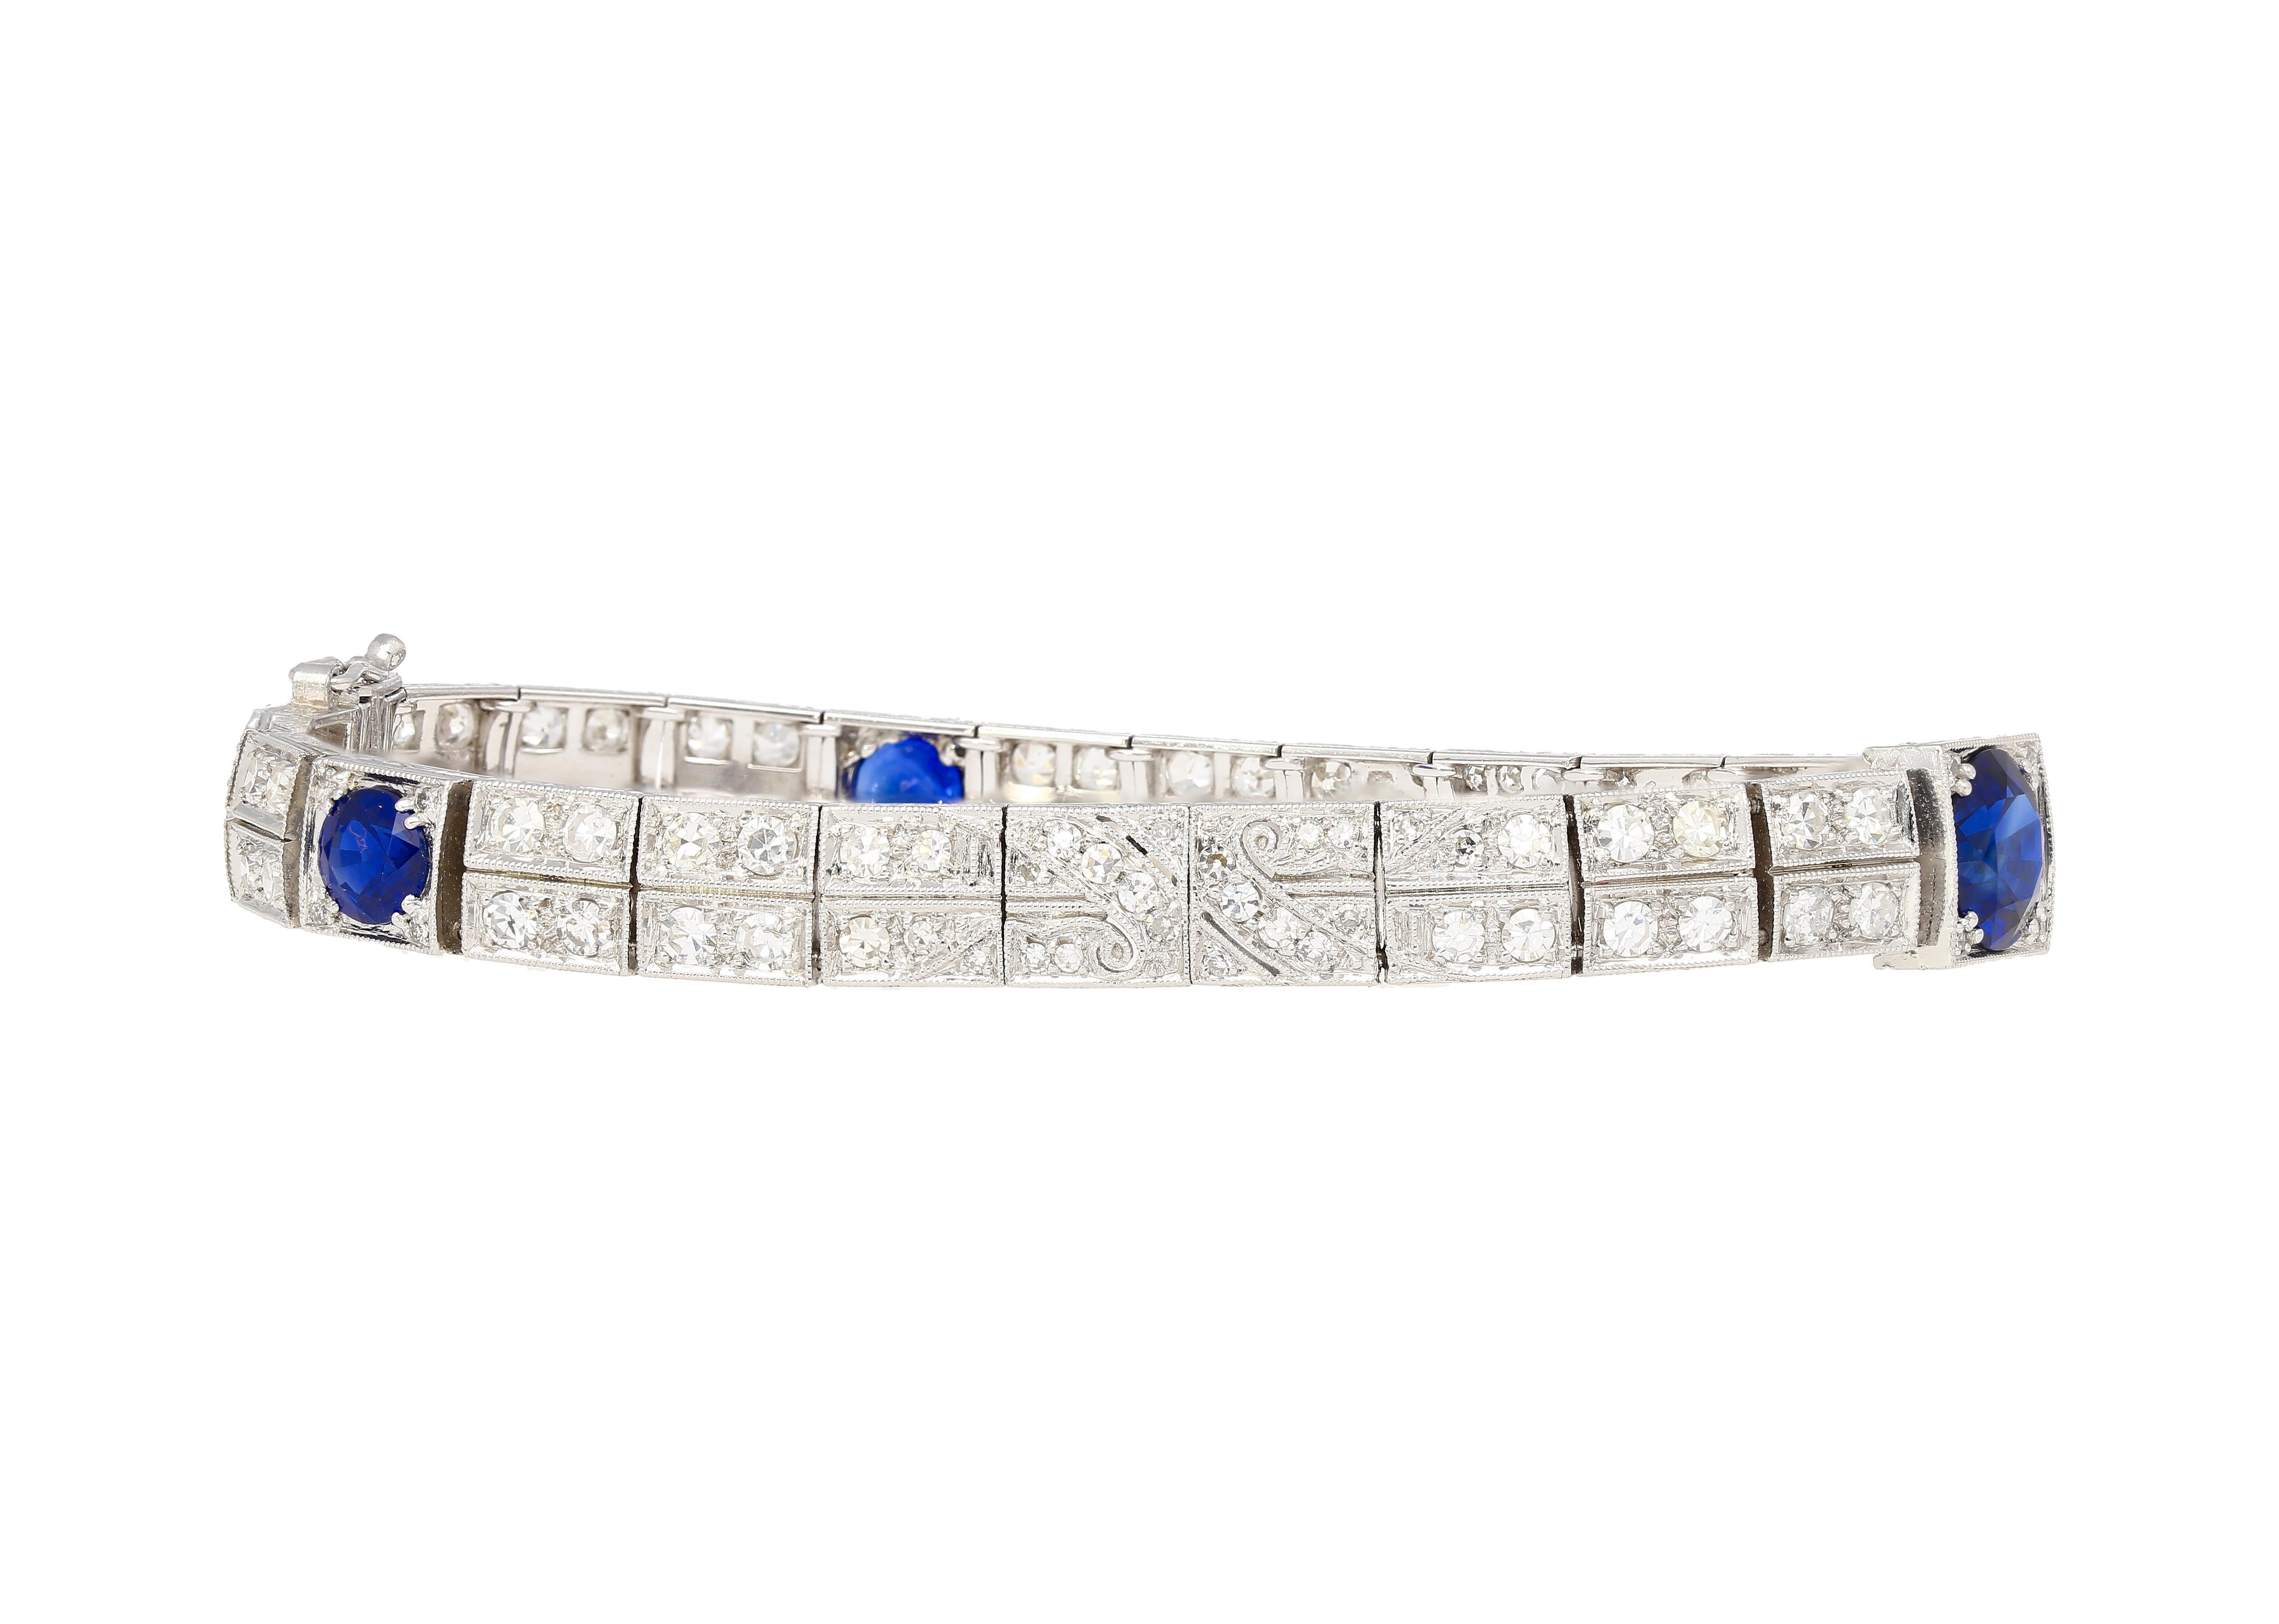 Antique Art Deco Platinum Filigree Blue Sapphire & Diamond Bracelet In Excellent Condition For Sale In Miami, FL